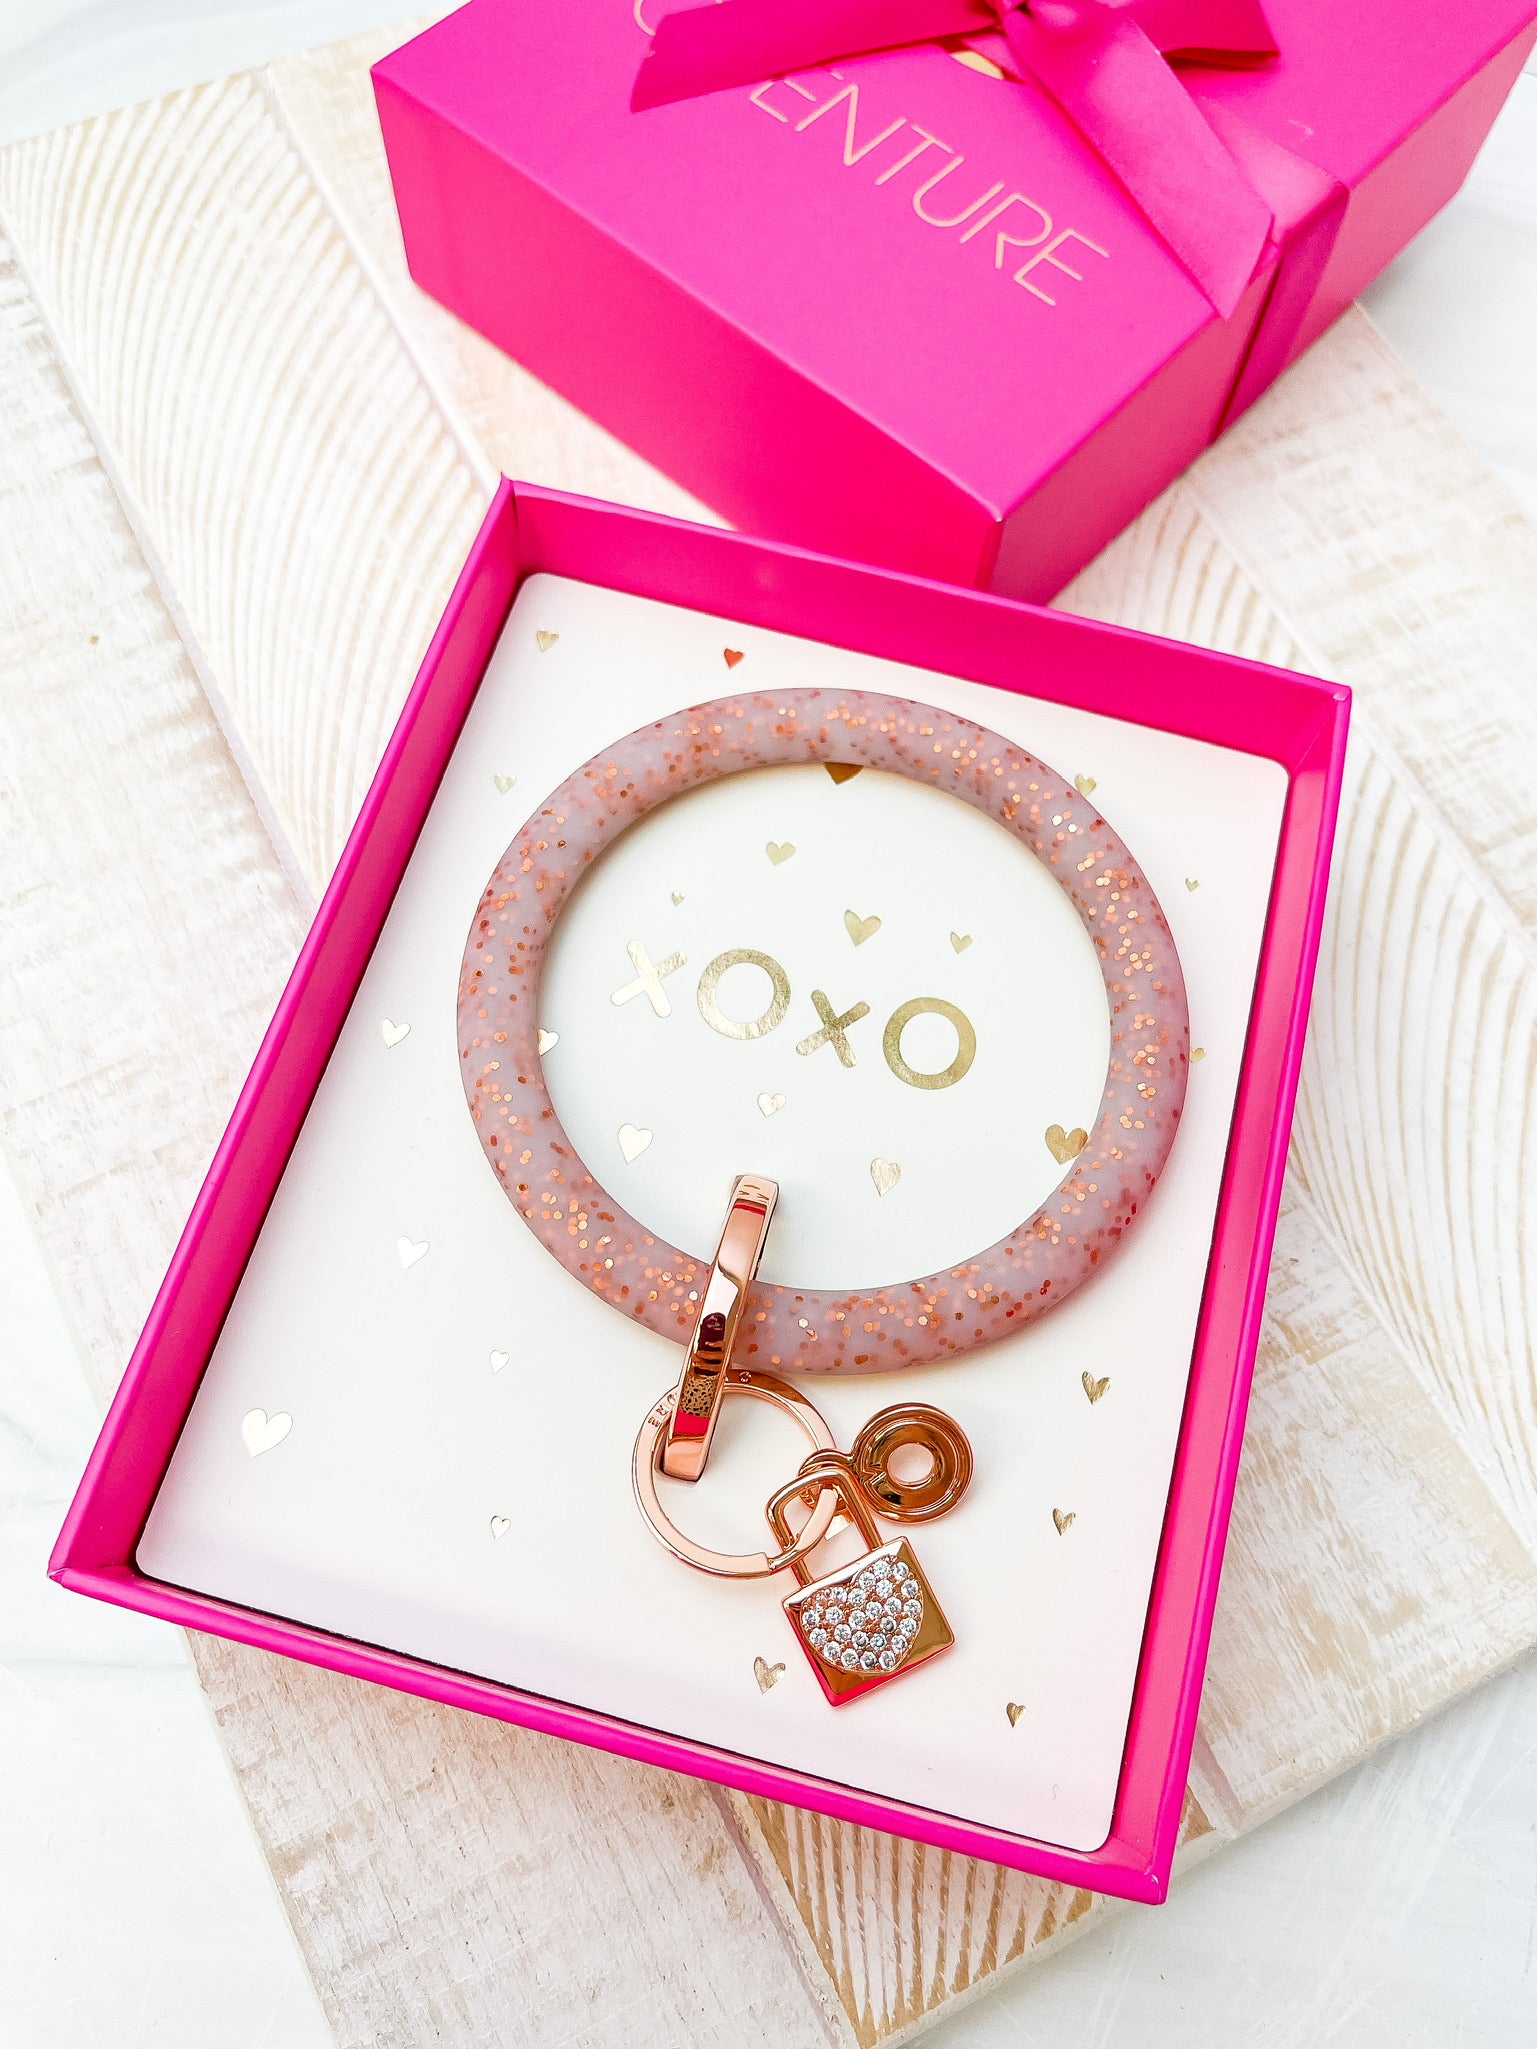 'xOxO' Rose Gold Confetti O-Venture Gift Set